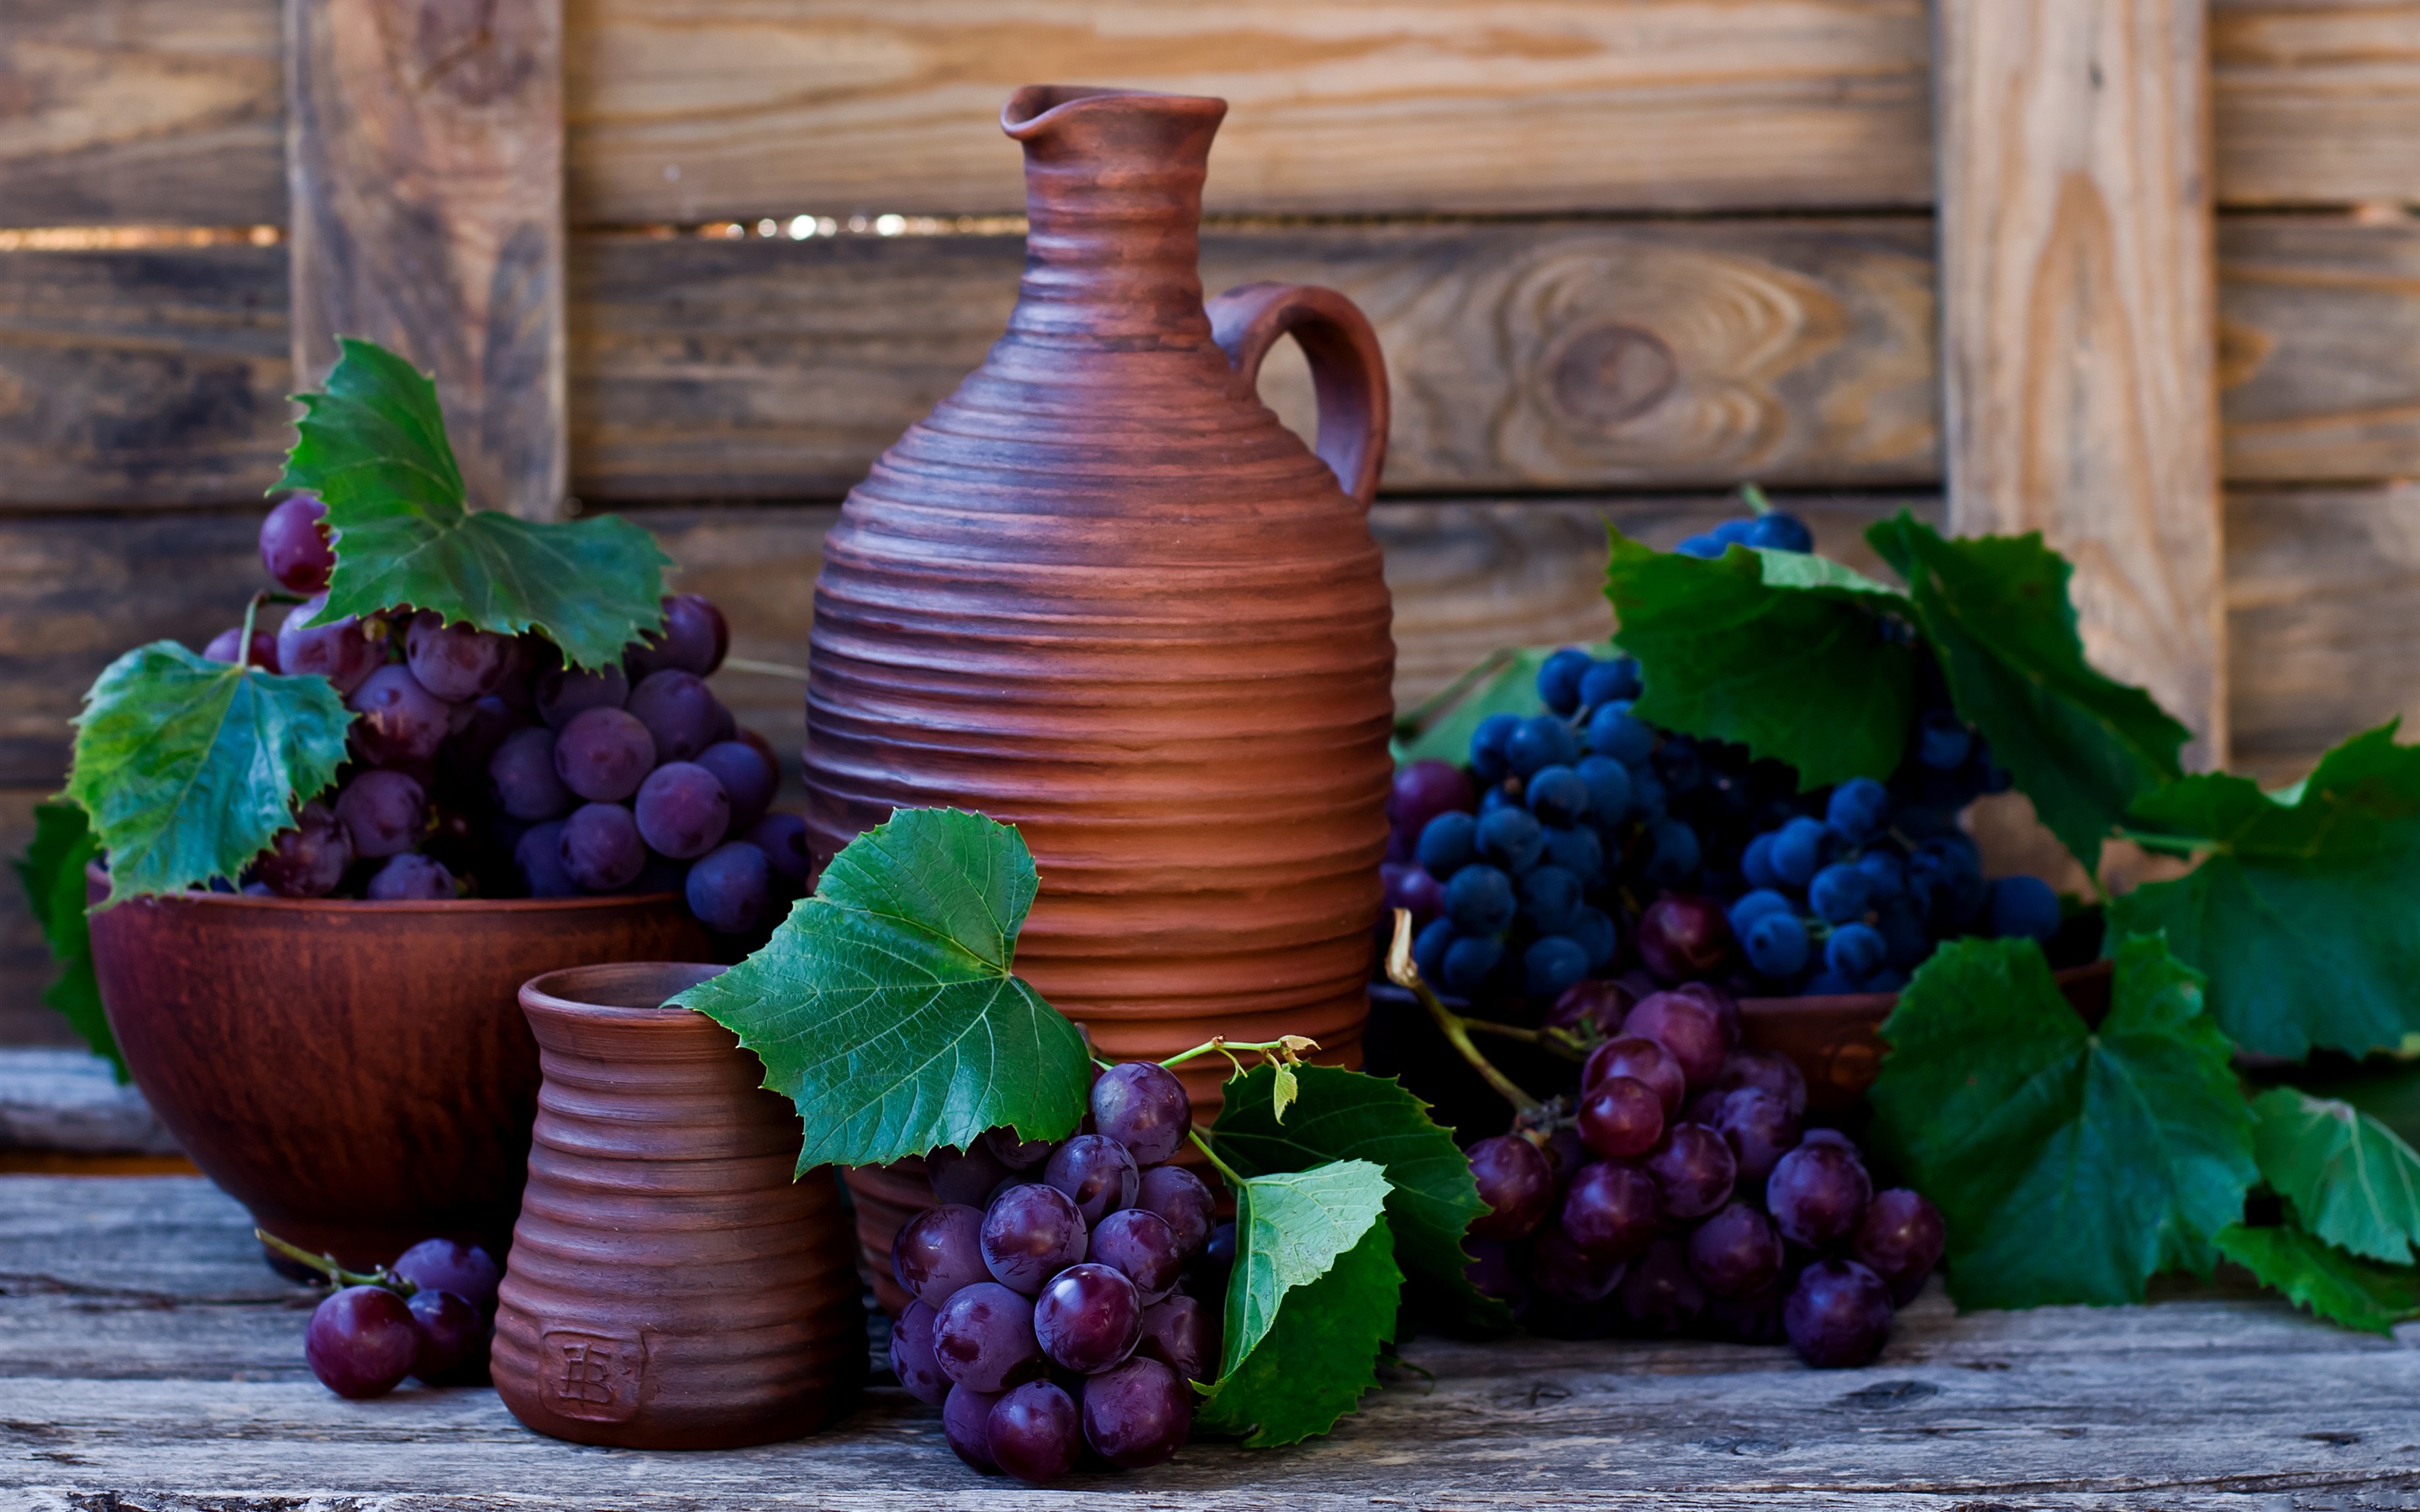 ceramic, photography, still life, bowl, fruit, grapes, purple